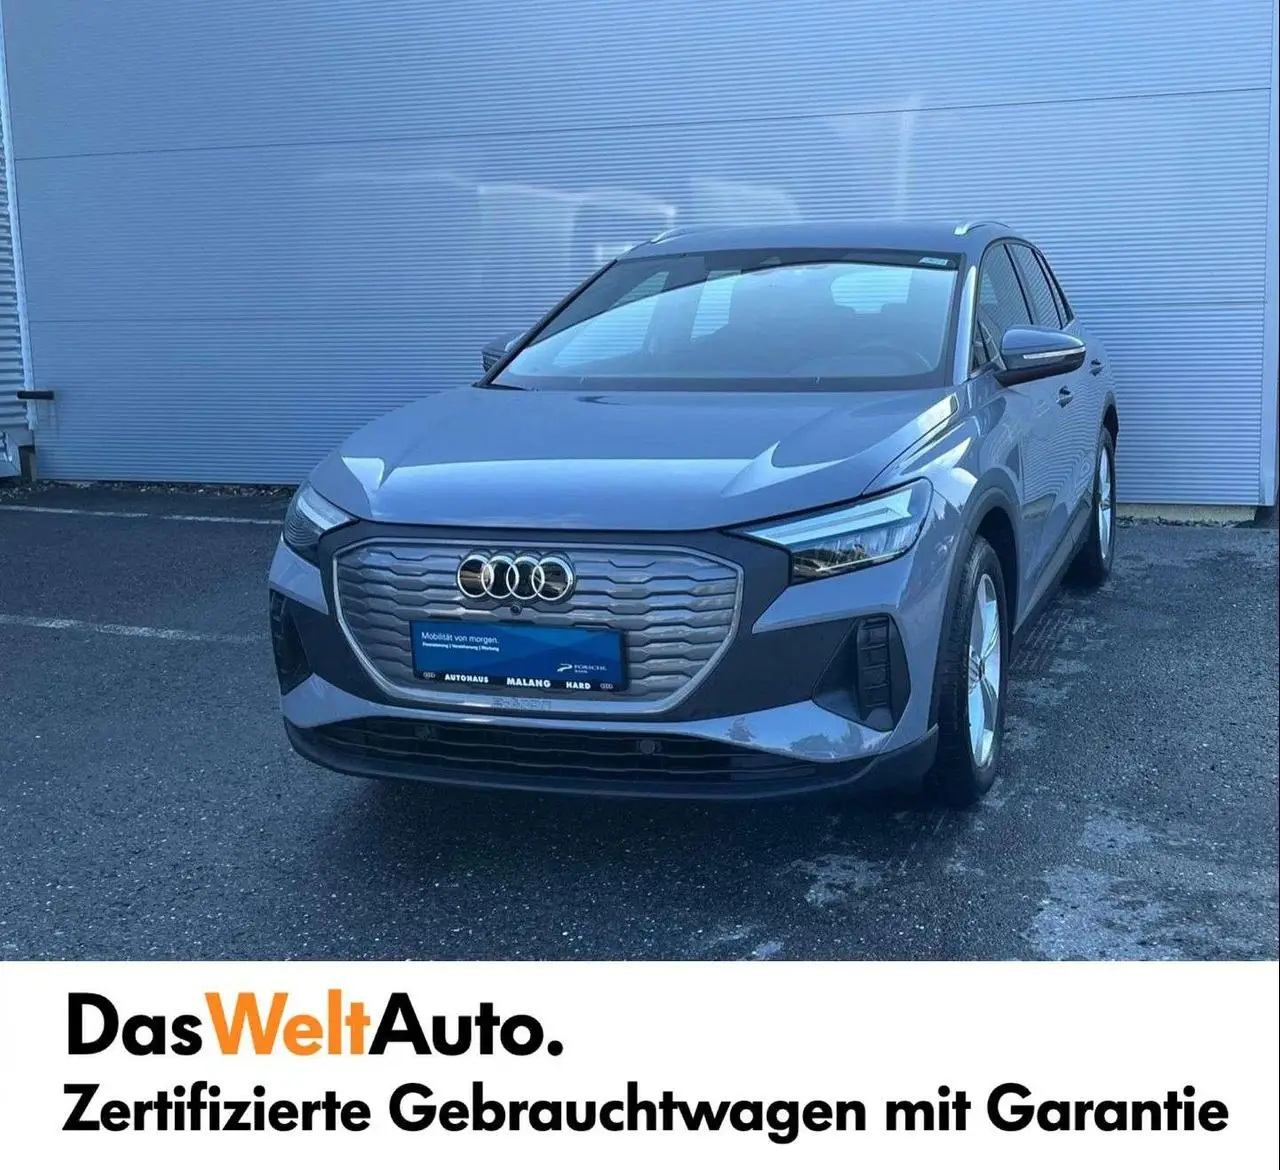 Photo 1 : Audi Q4 2021 Electric